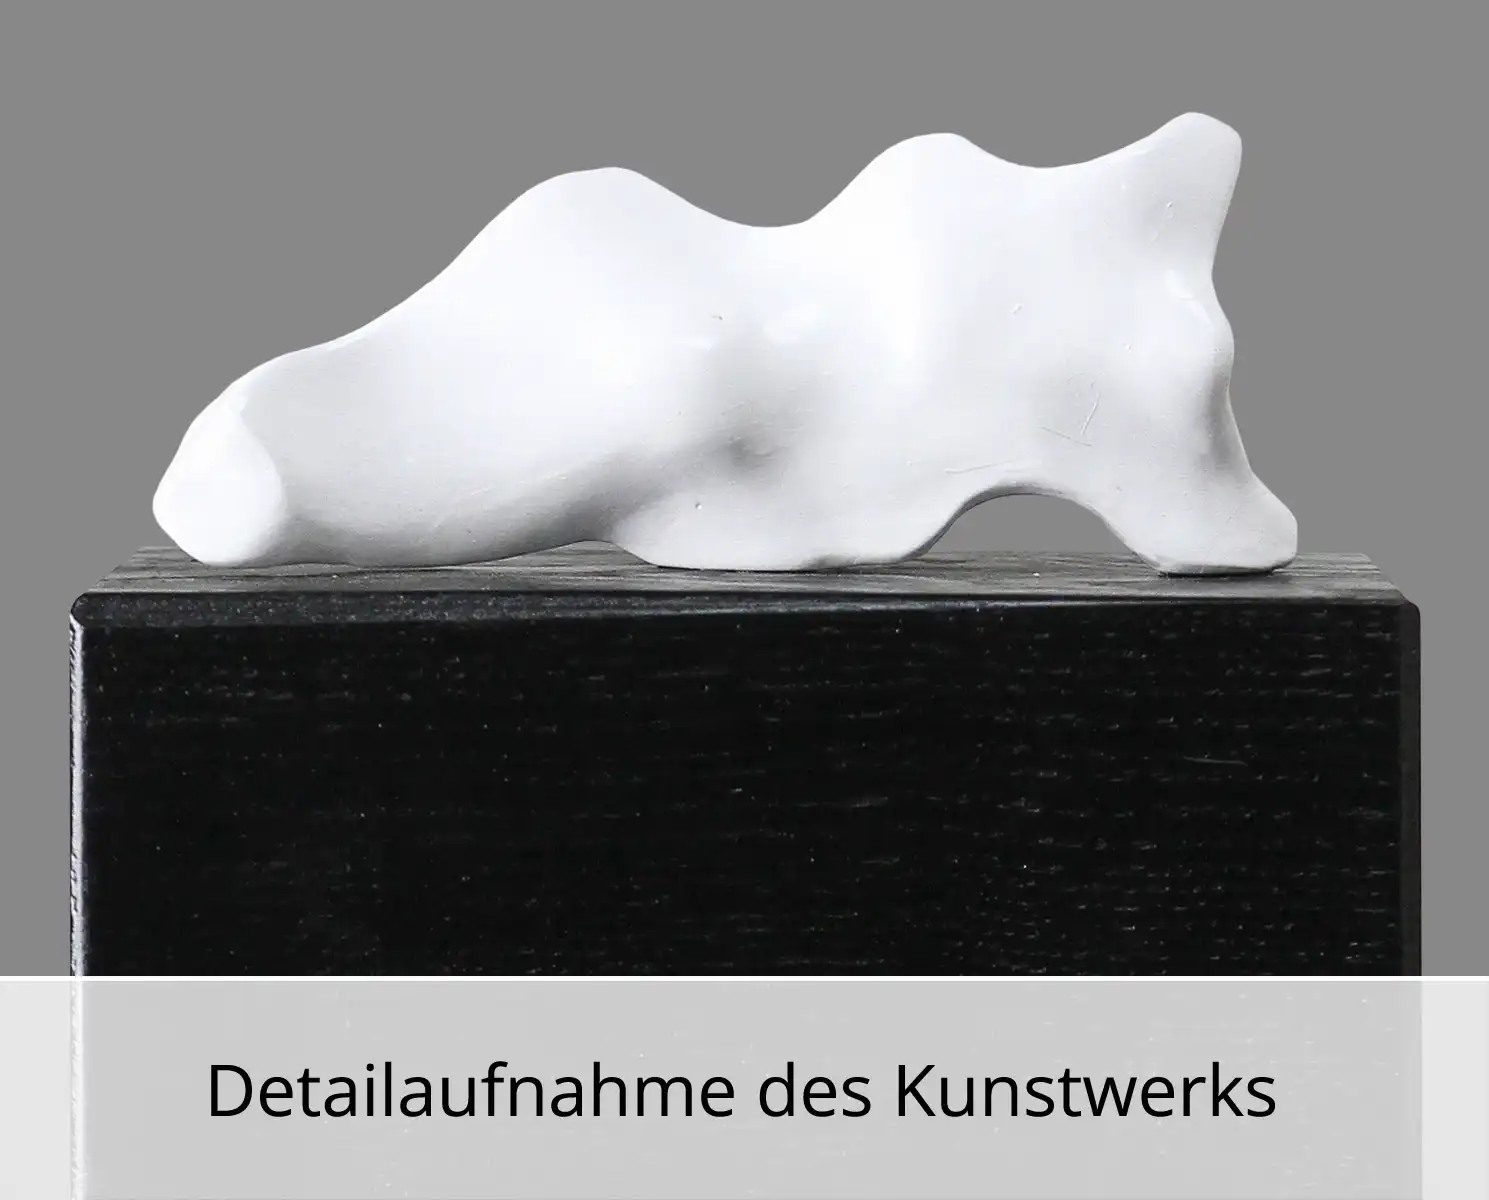 C. Blechschmidt: "Nora", zeitgenössische Plastik, Original/Unikat